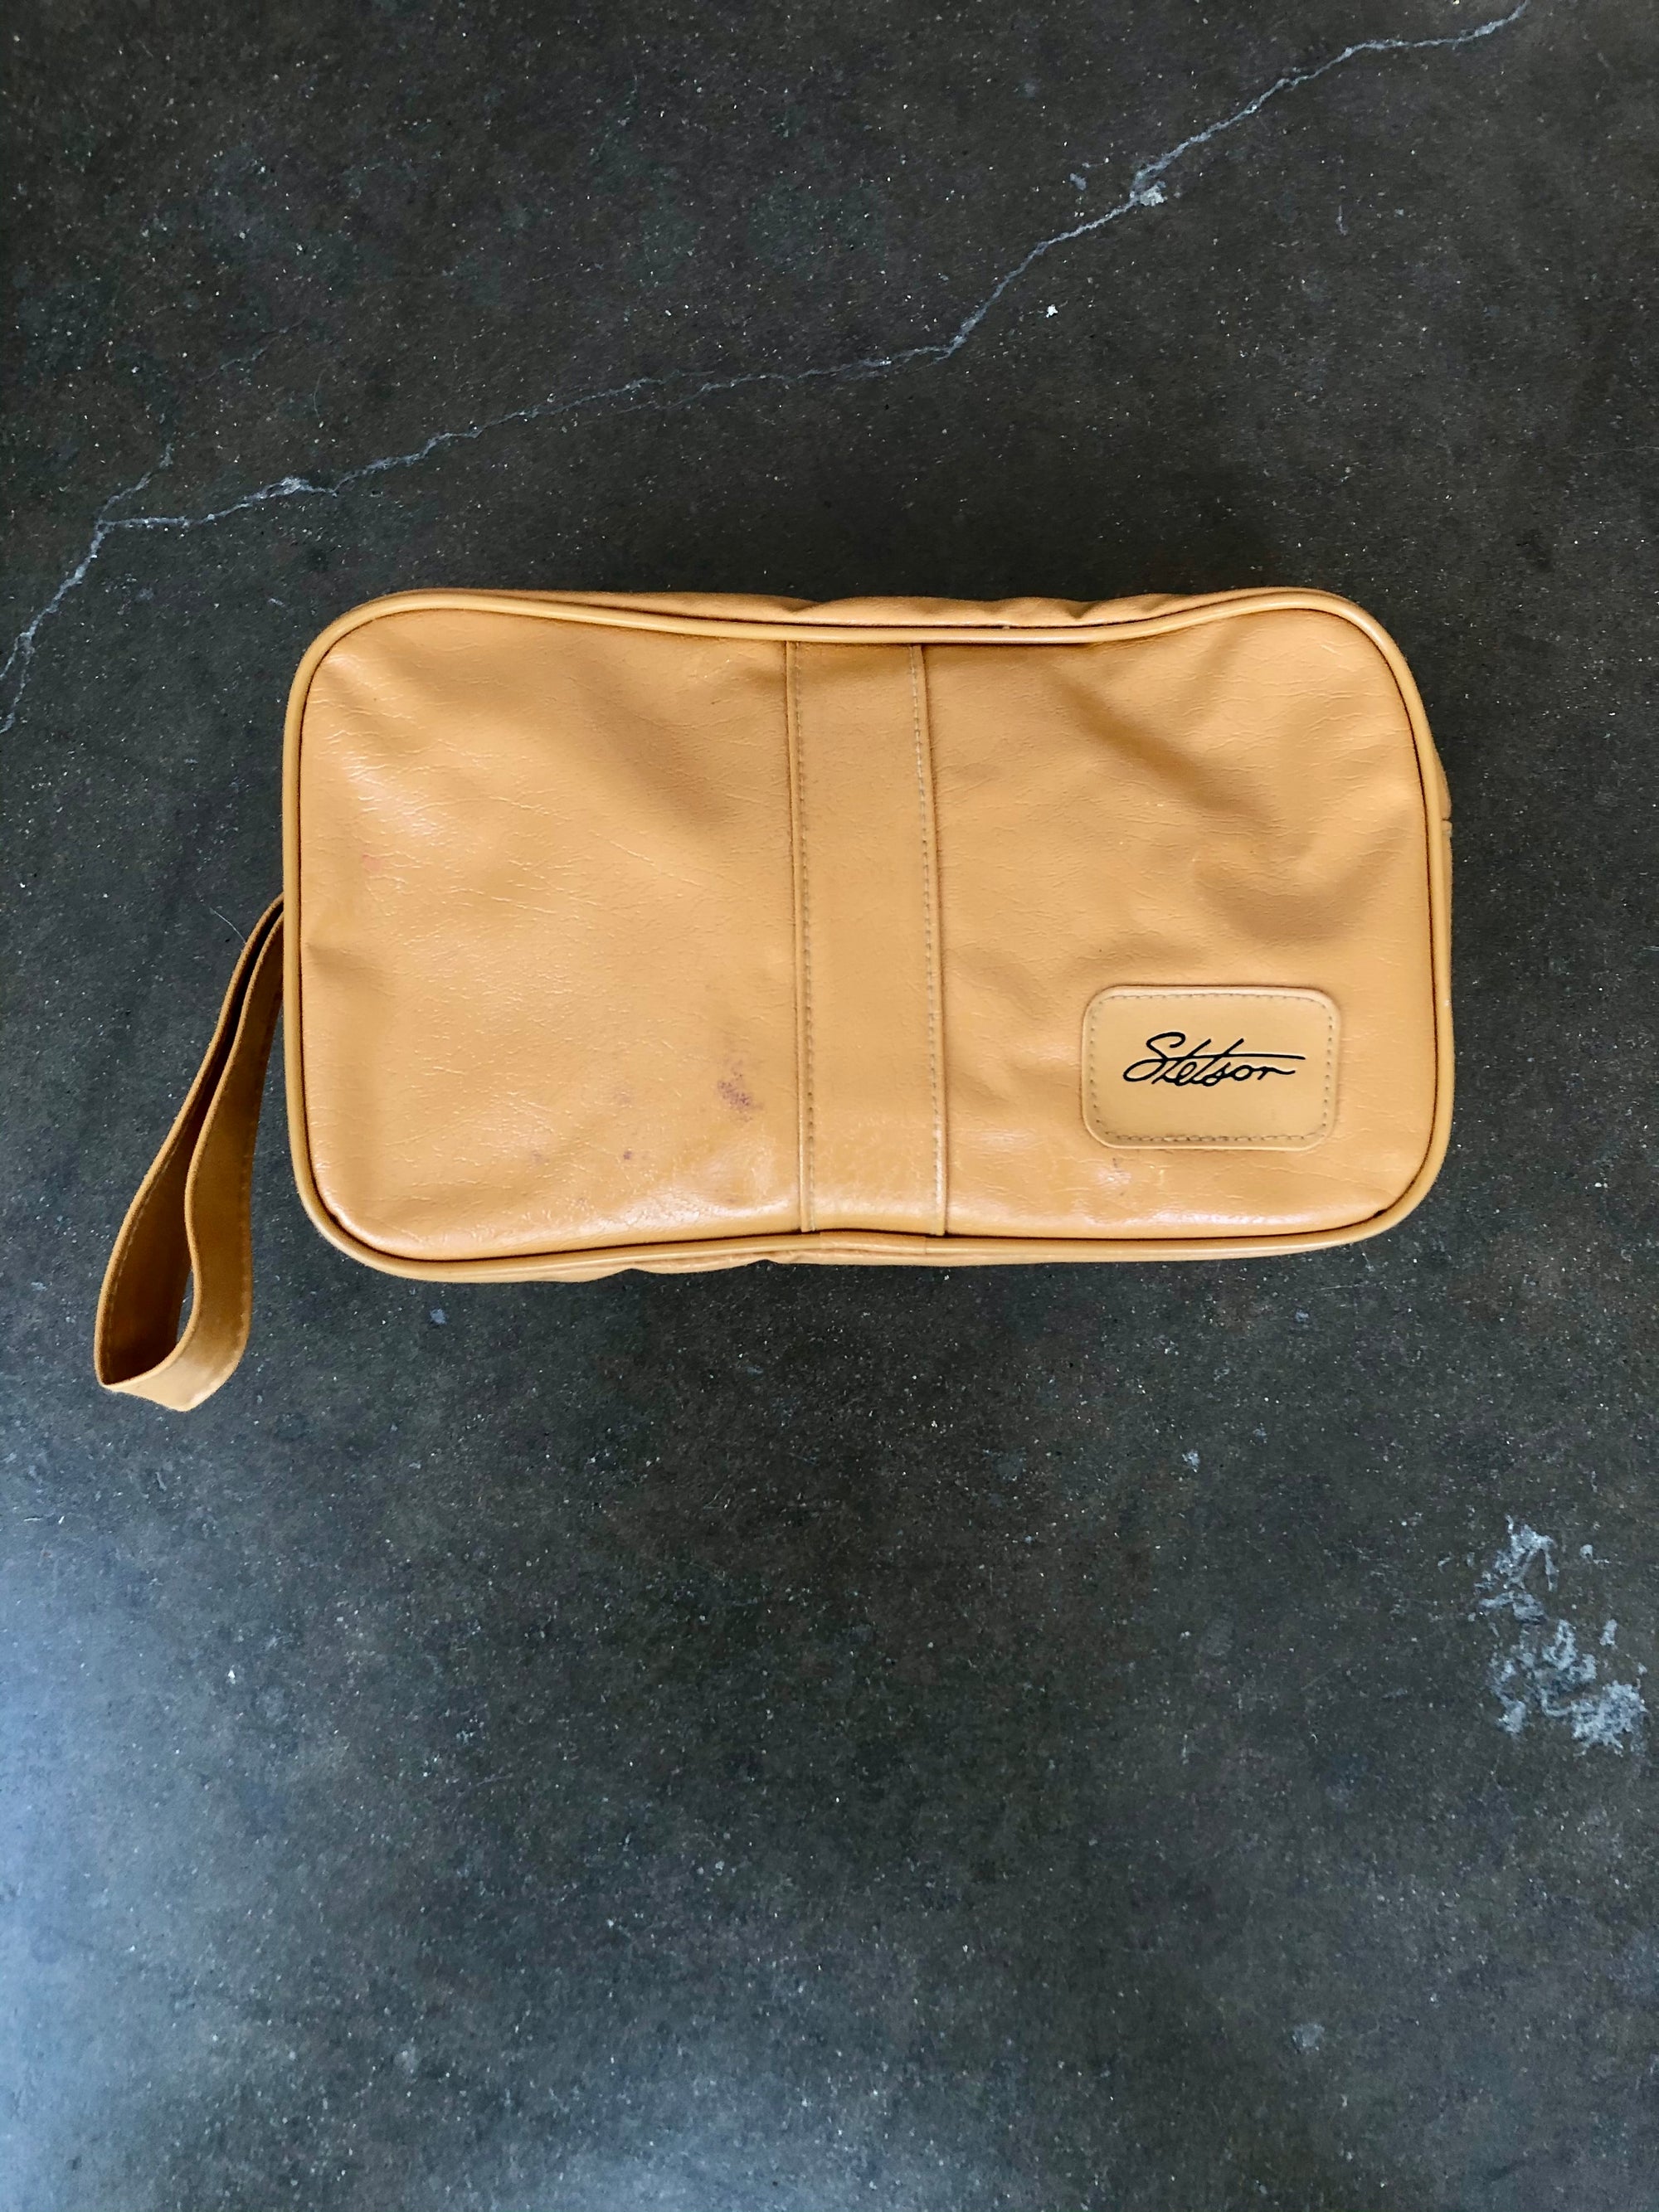 Vintage Stetson Leather Dopp Kit